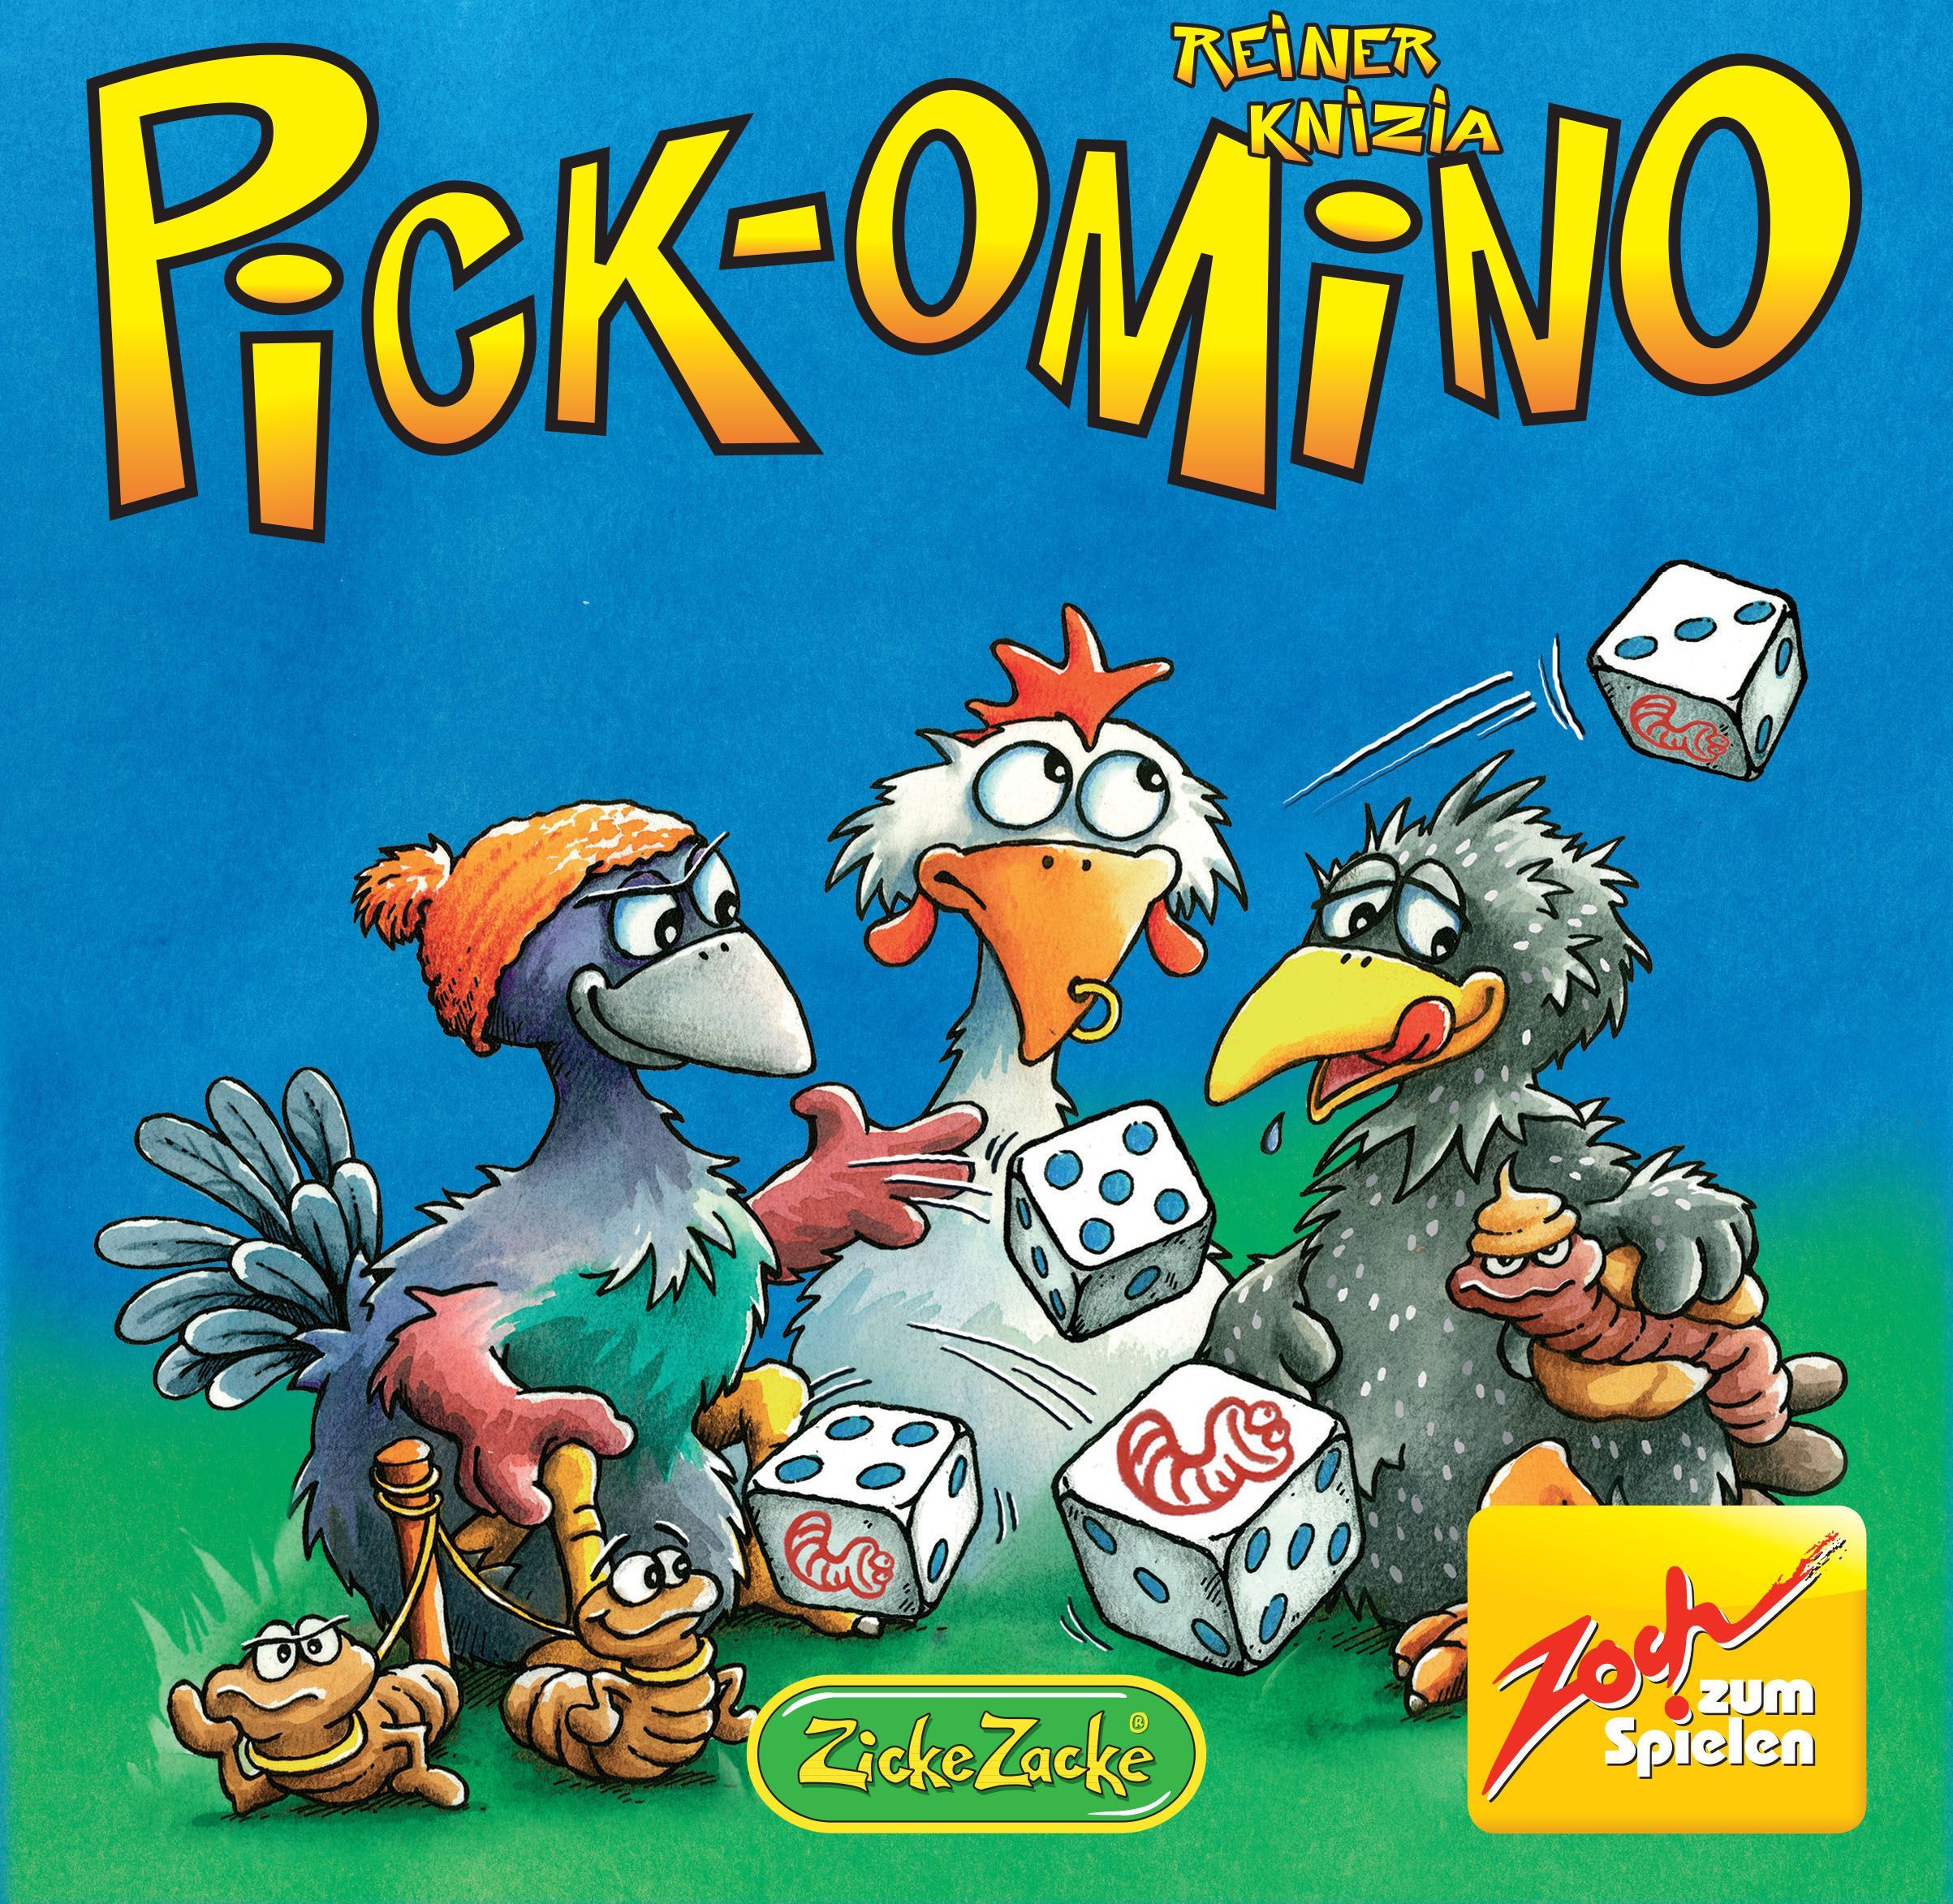 Reiner Knizia's dice game Pickomino comes to iOS